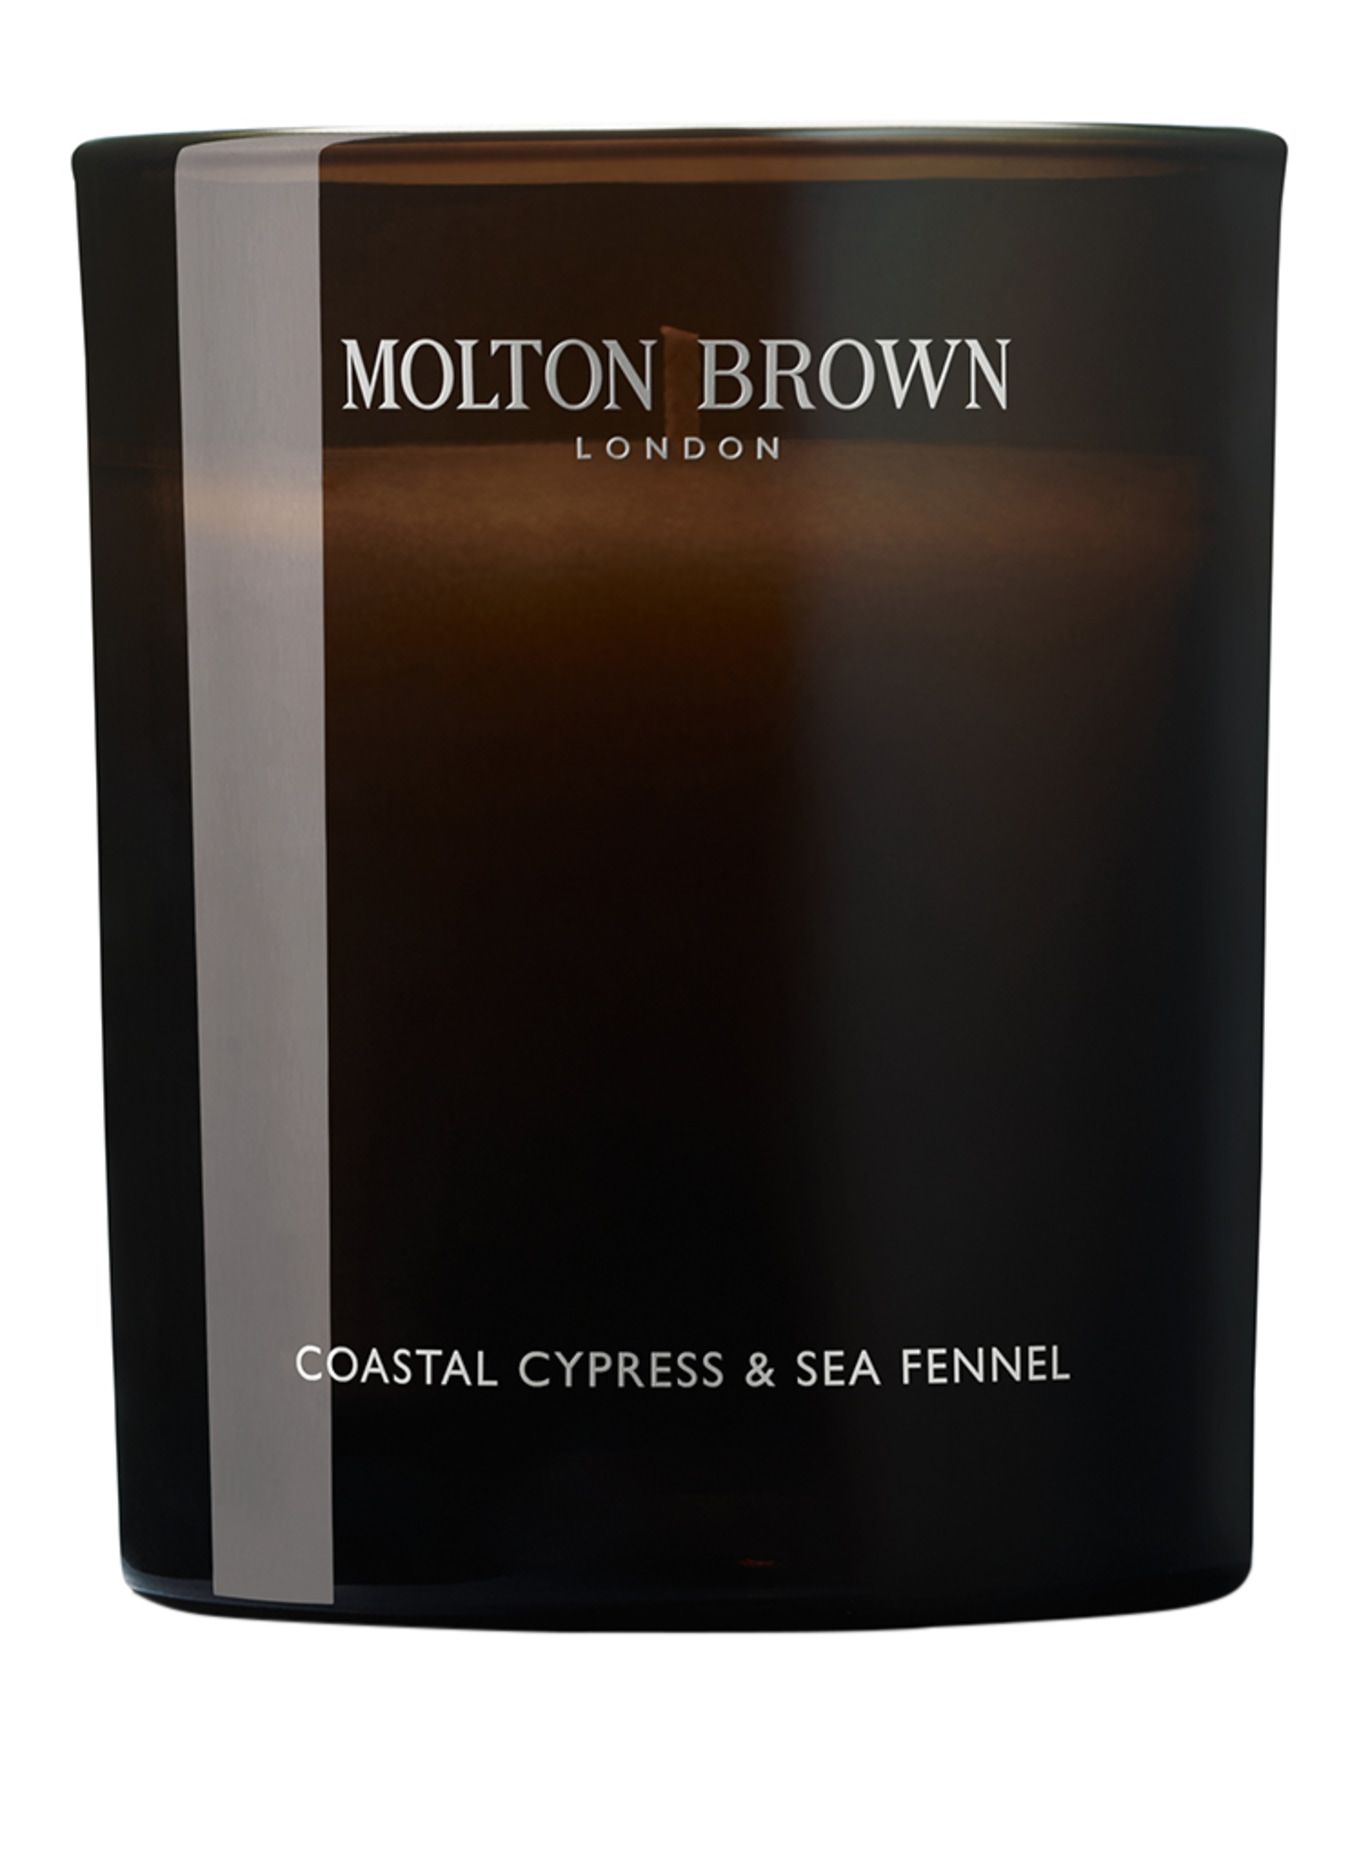 MOLTON BROWN COASTAL CYPRESS & SEA FENNEL (Bild 1)